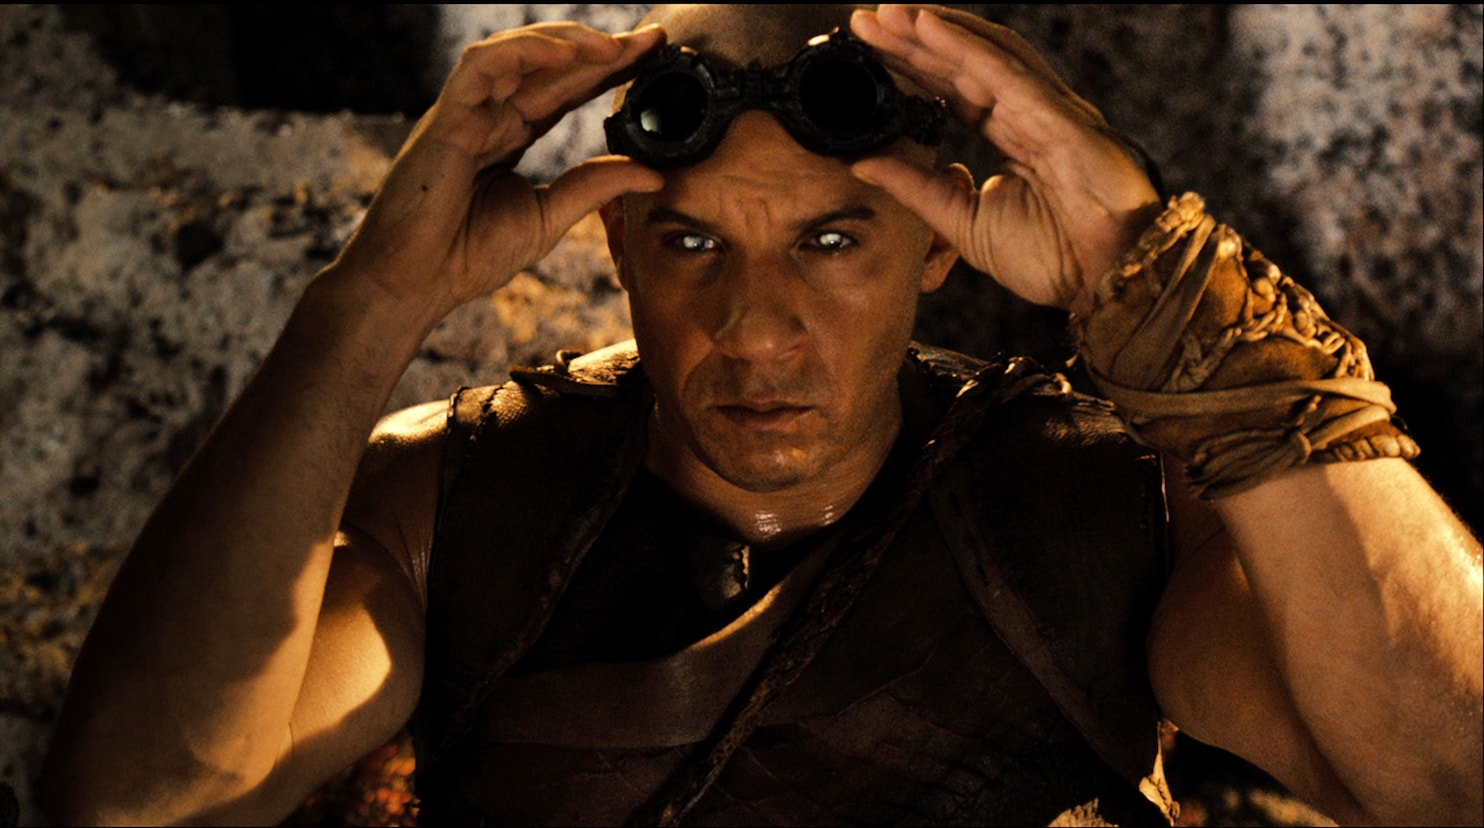 Riddick’s fourth film will star Vin Diesel